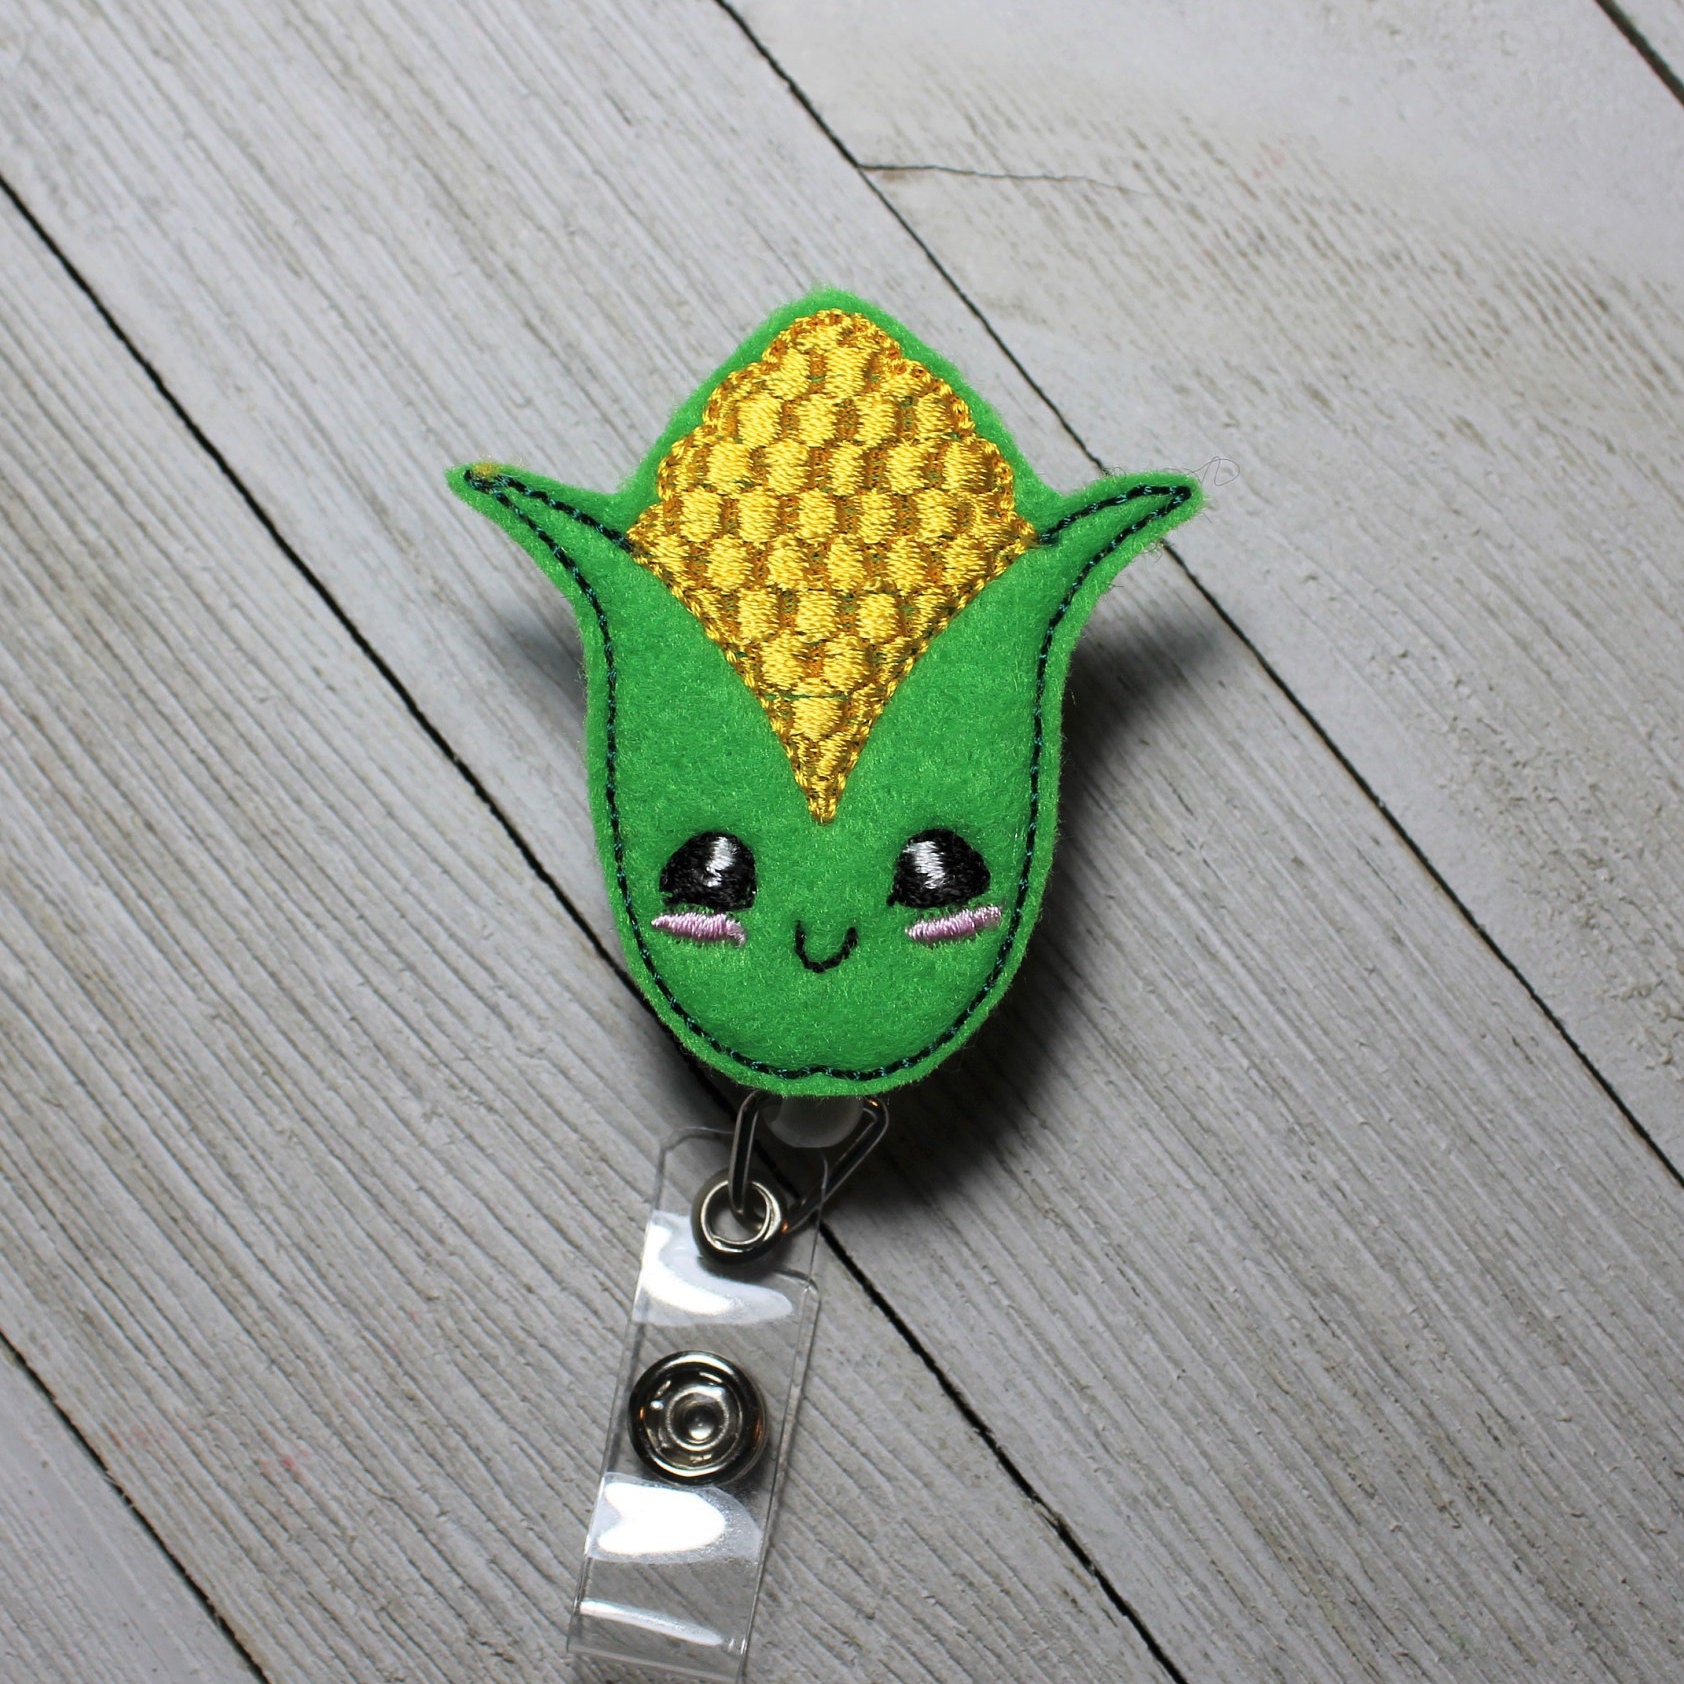 Corn Cob badge holder